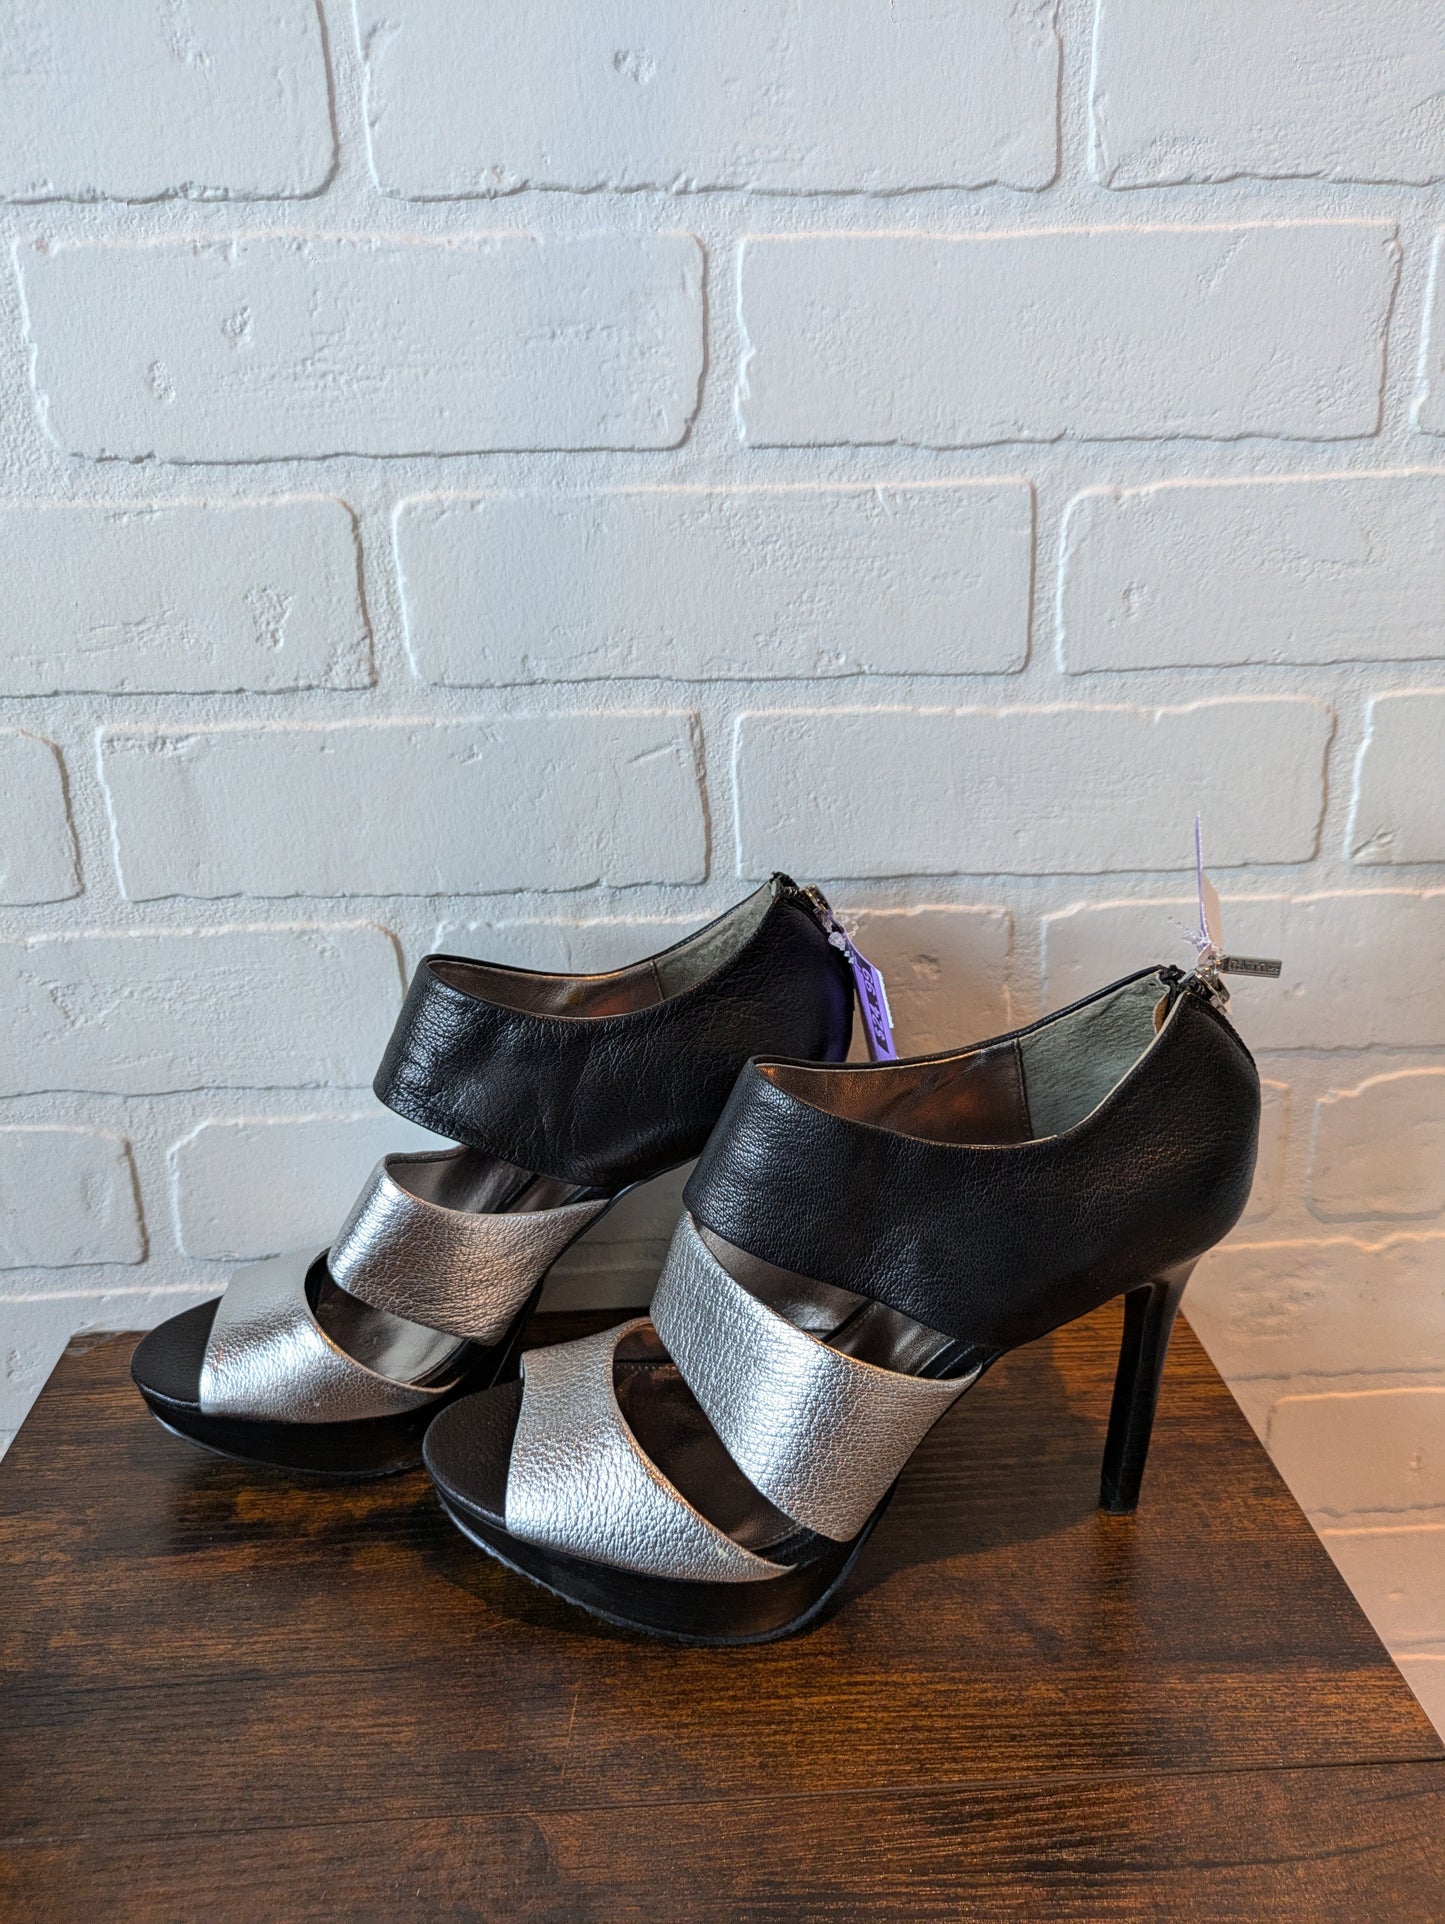 Black & Silver Shoes Heels Wedge Calvin Klein, Size 8